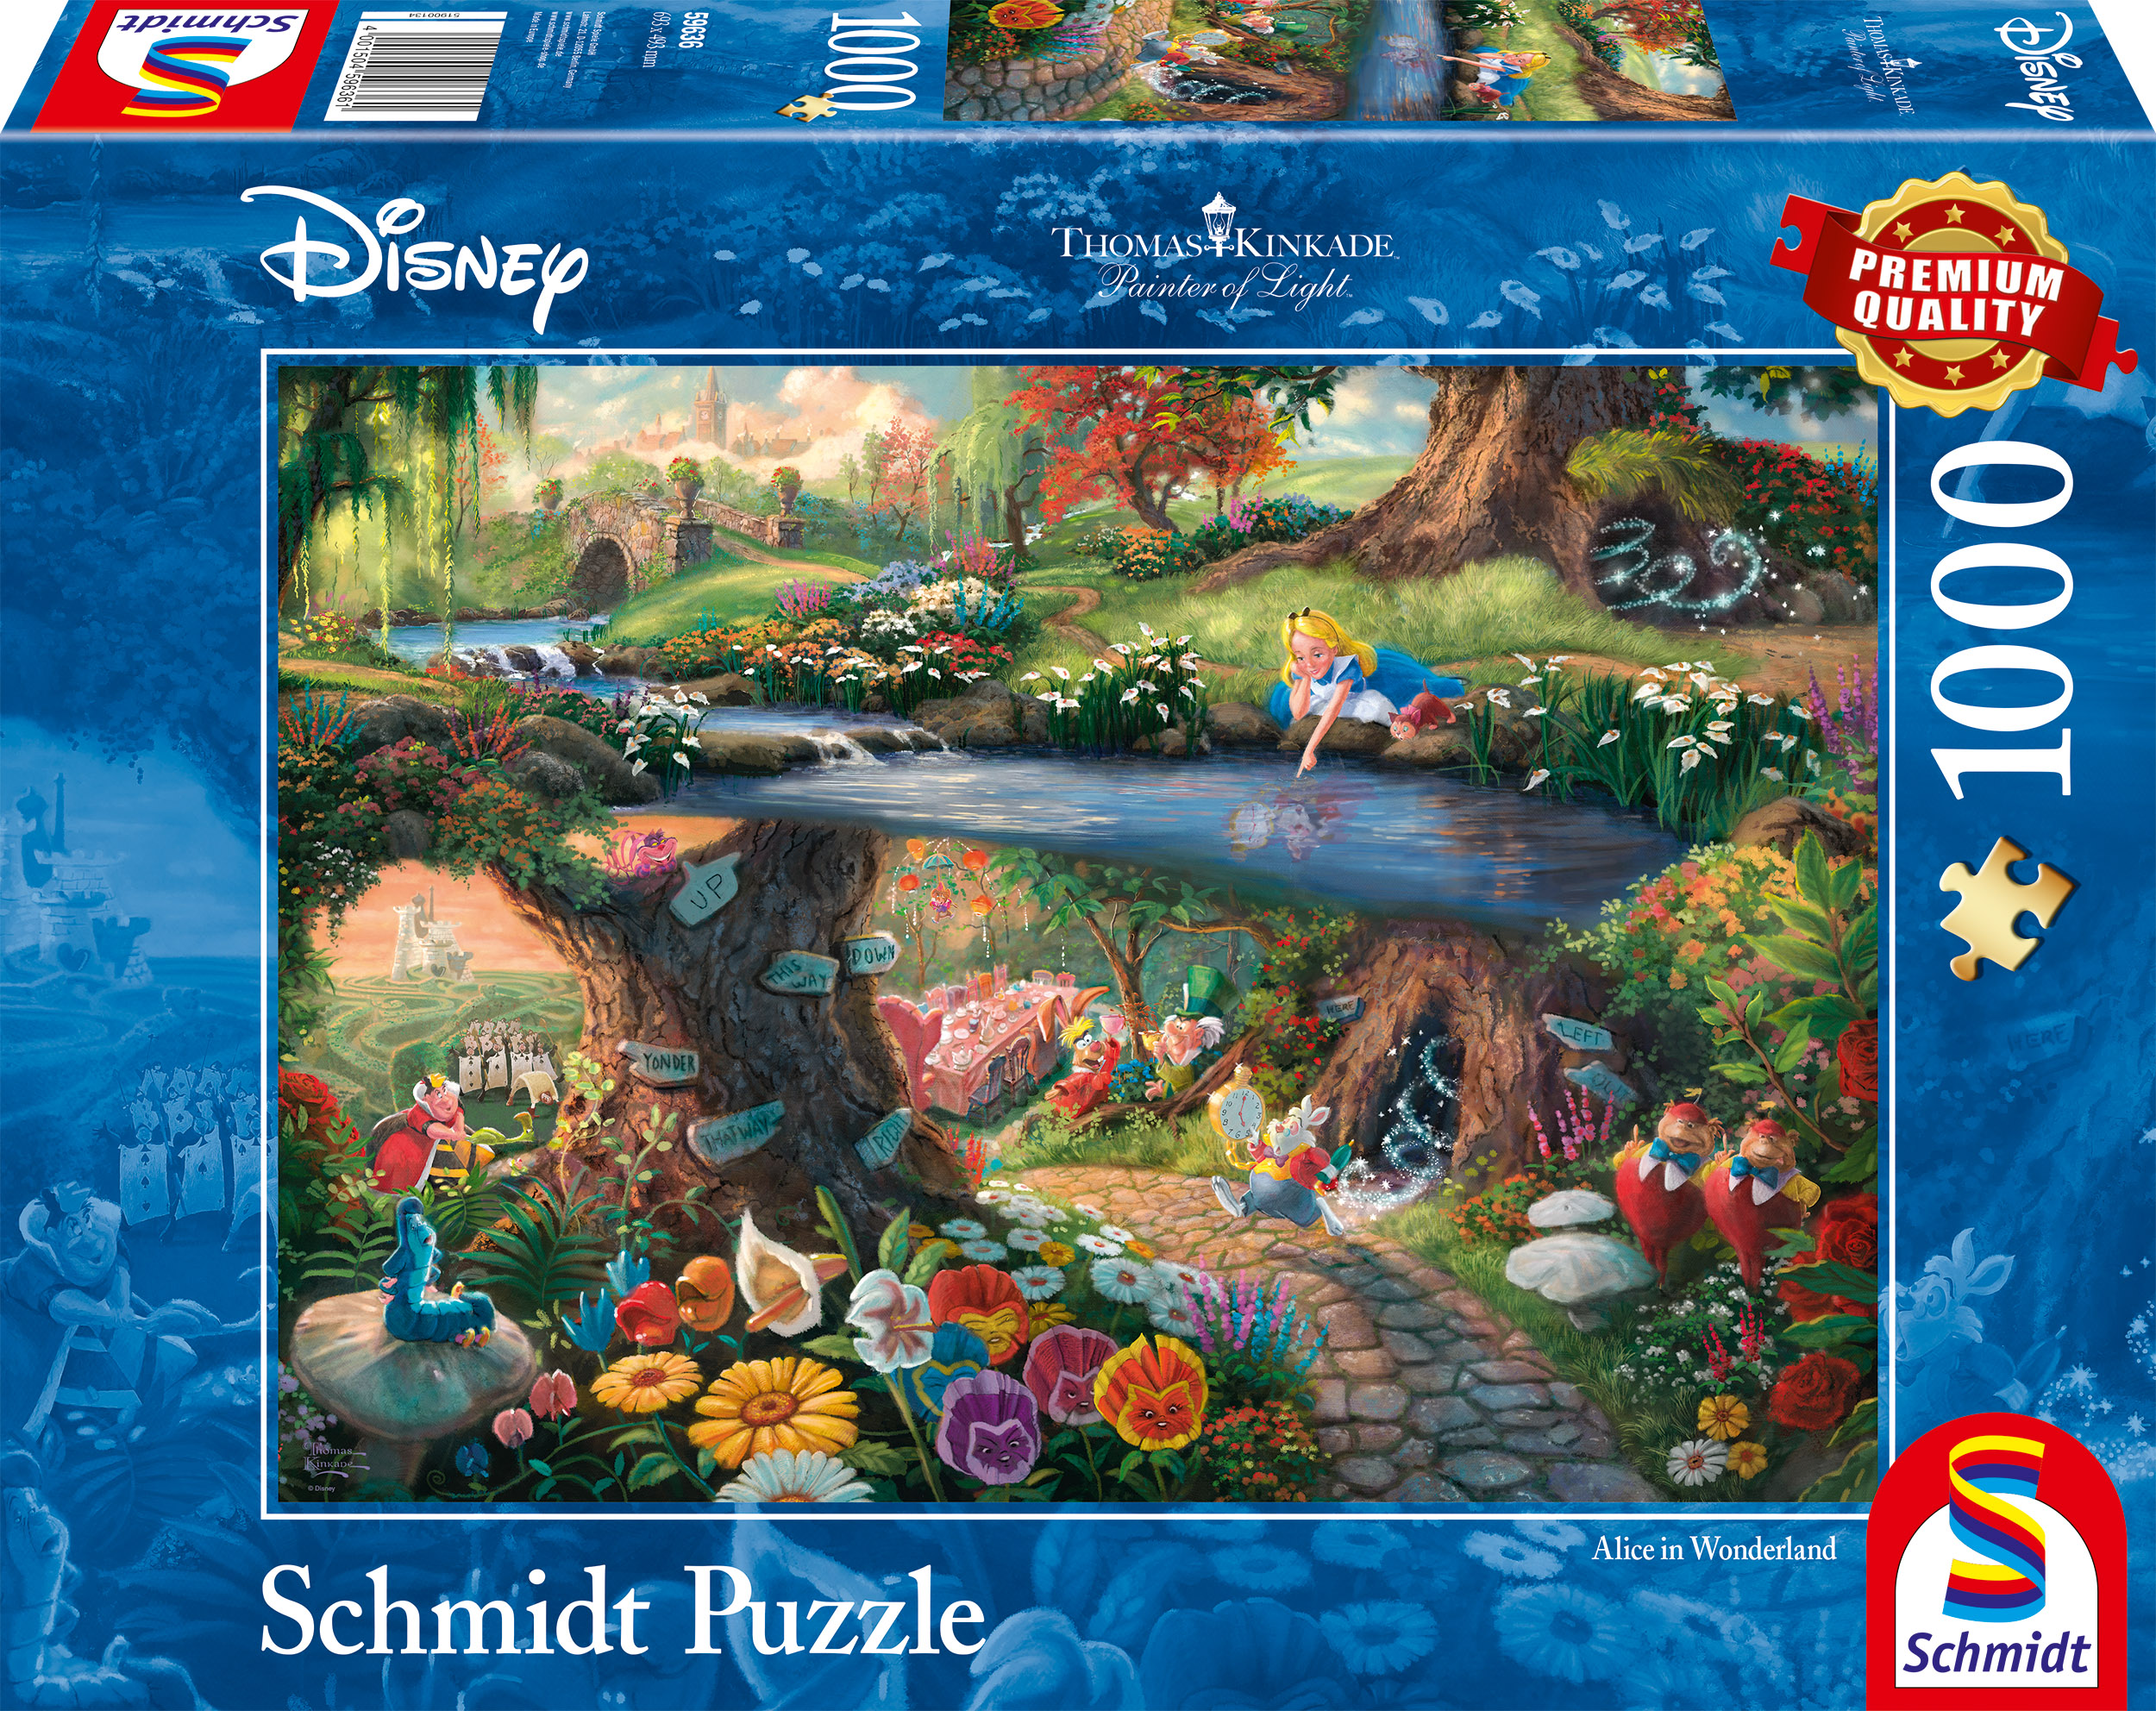 SCHMIDT Puzzle Wunderland SPIELE im (UE) Disney Alice